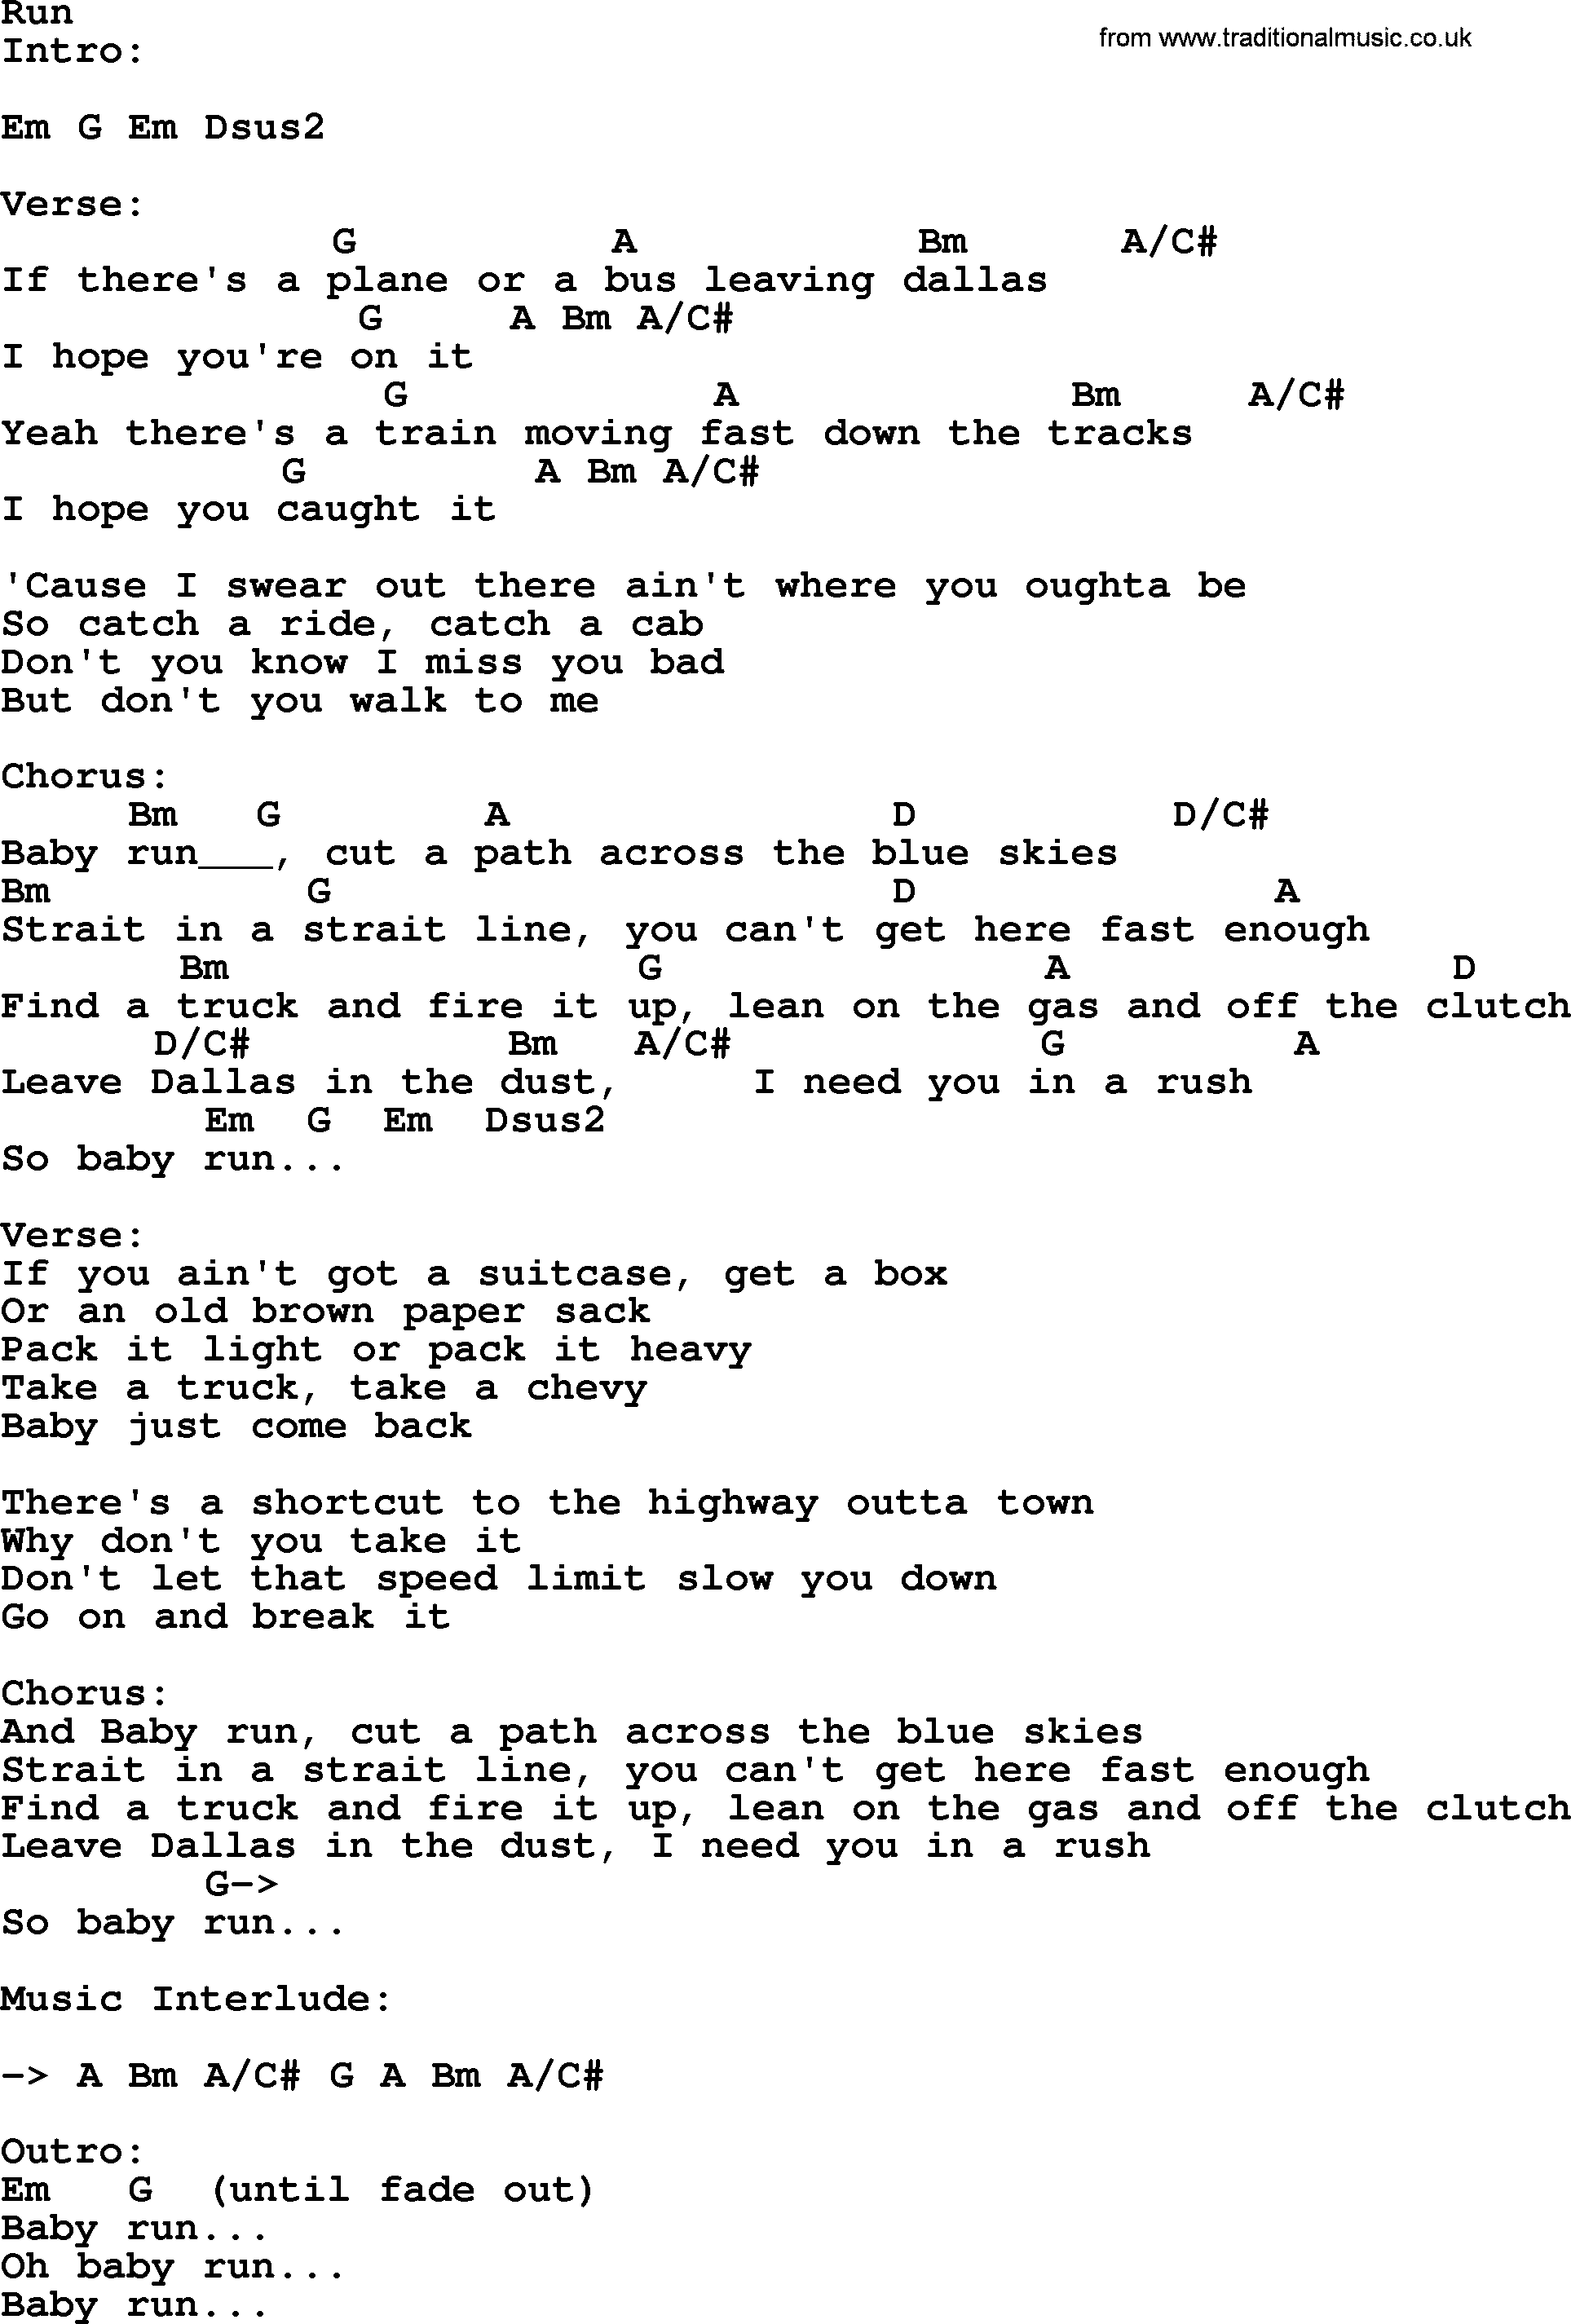 George Strait song: Run, lyrics and chords